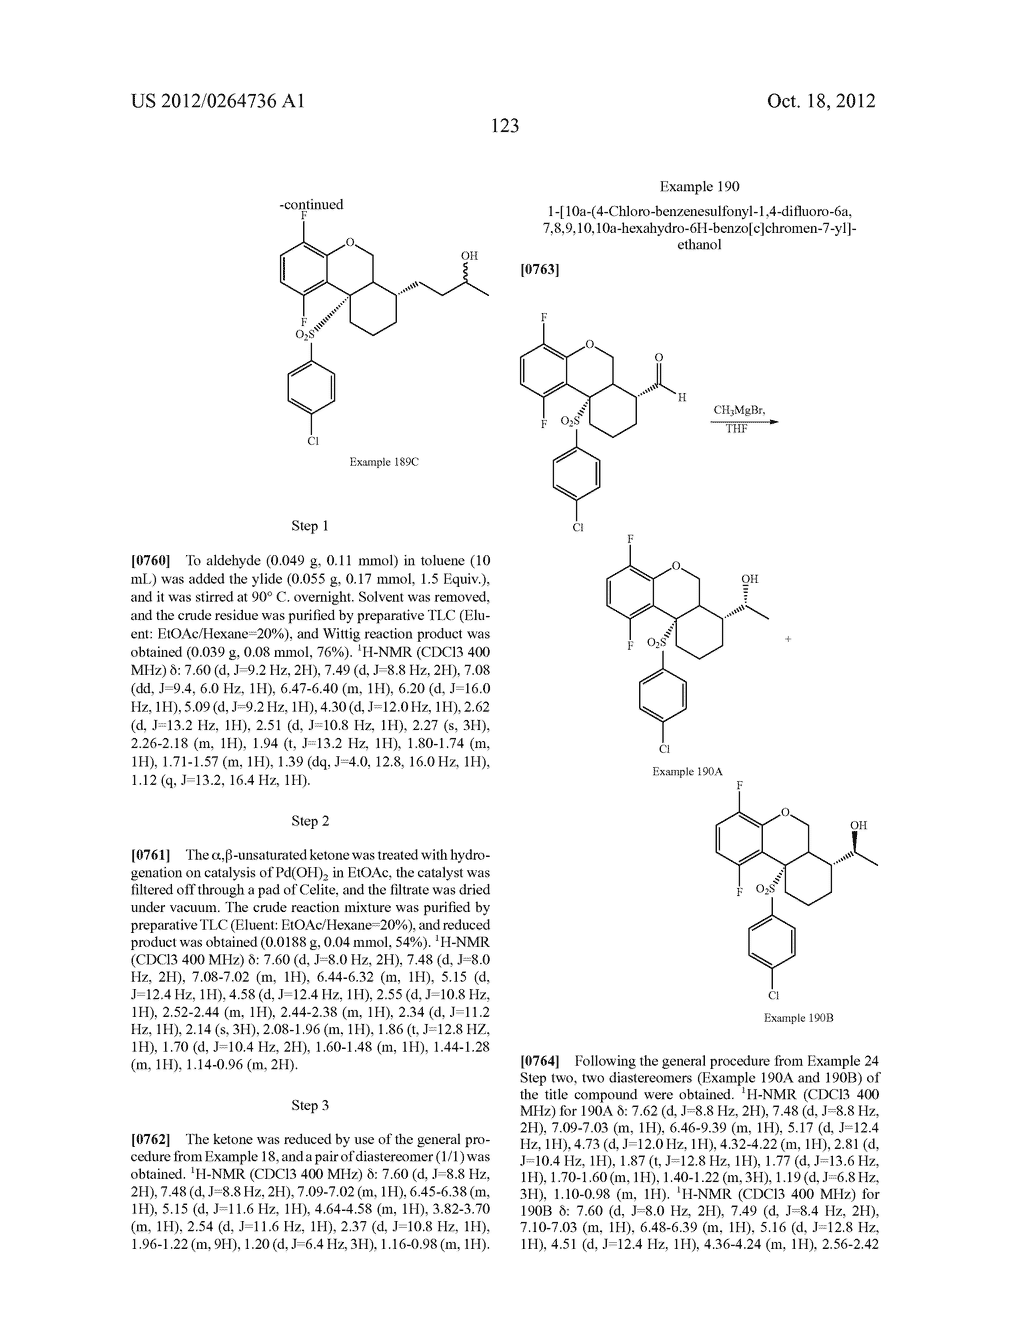 BENZENESULFONYL-CHROMANE, THIOCHROMANE, TETRAHYDRONAPHTHALENE AND RELATED     GAMMA SECRETASE INHIBITORS - diagram, schematic, and image 124